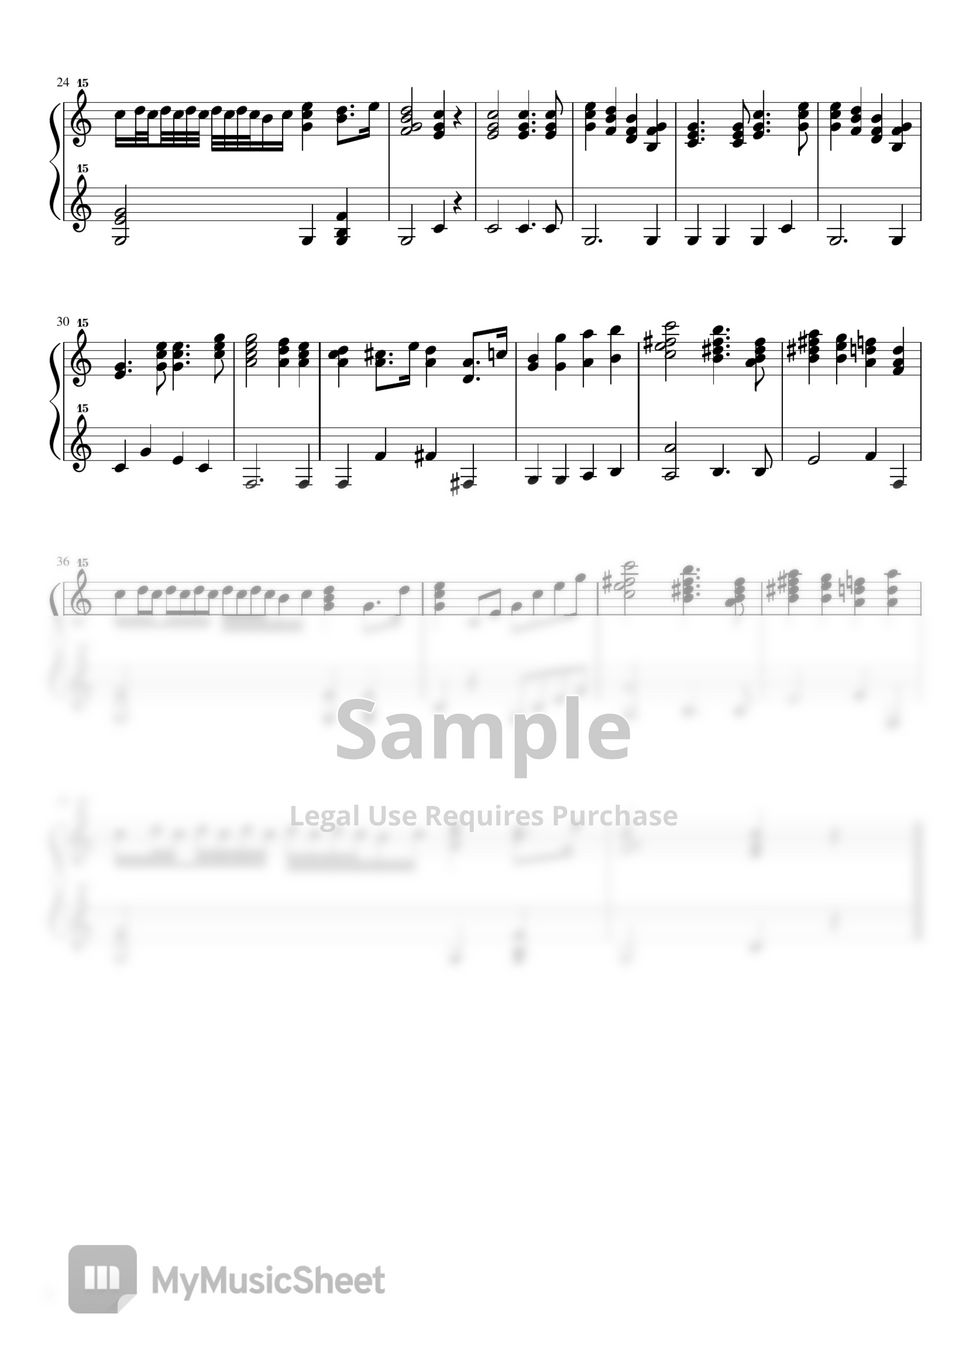 Mendelssohn - Wedding March (toy piano / 32 keys / classical) by Miyuh Kawanishi